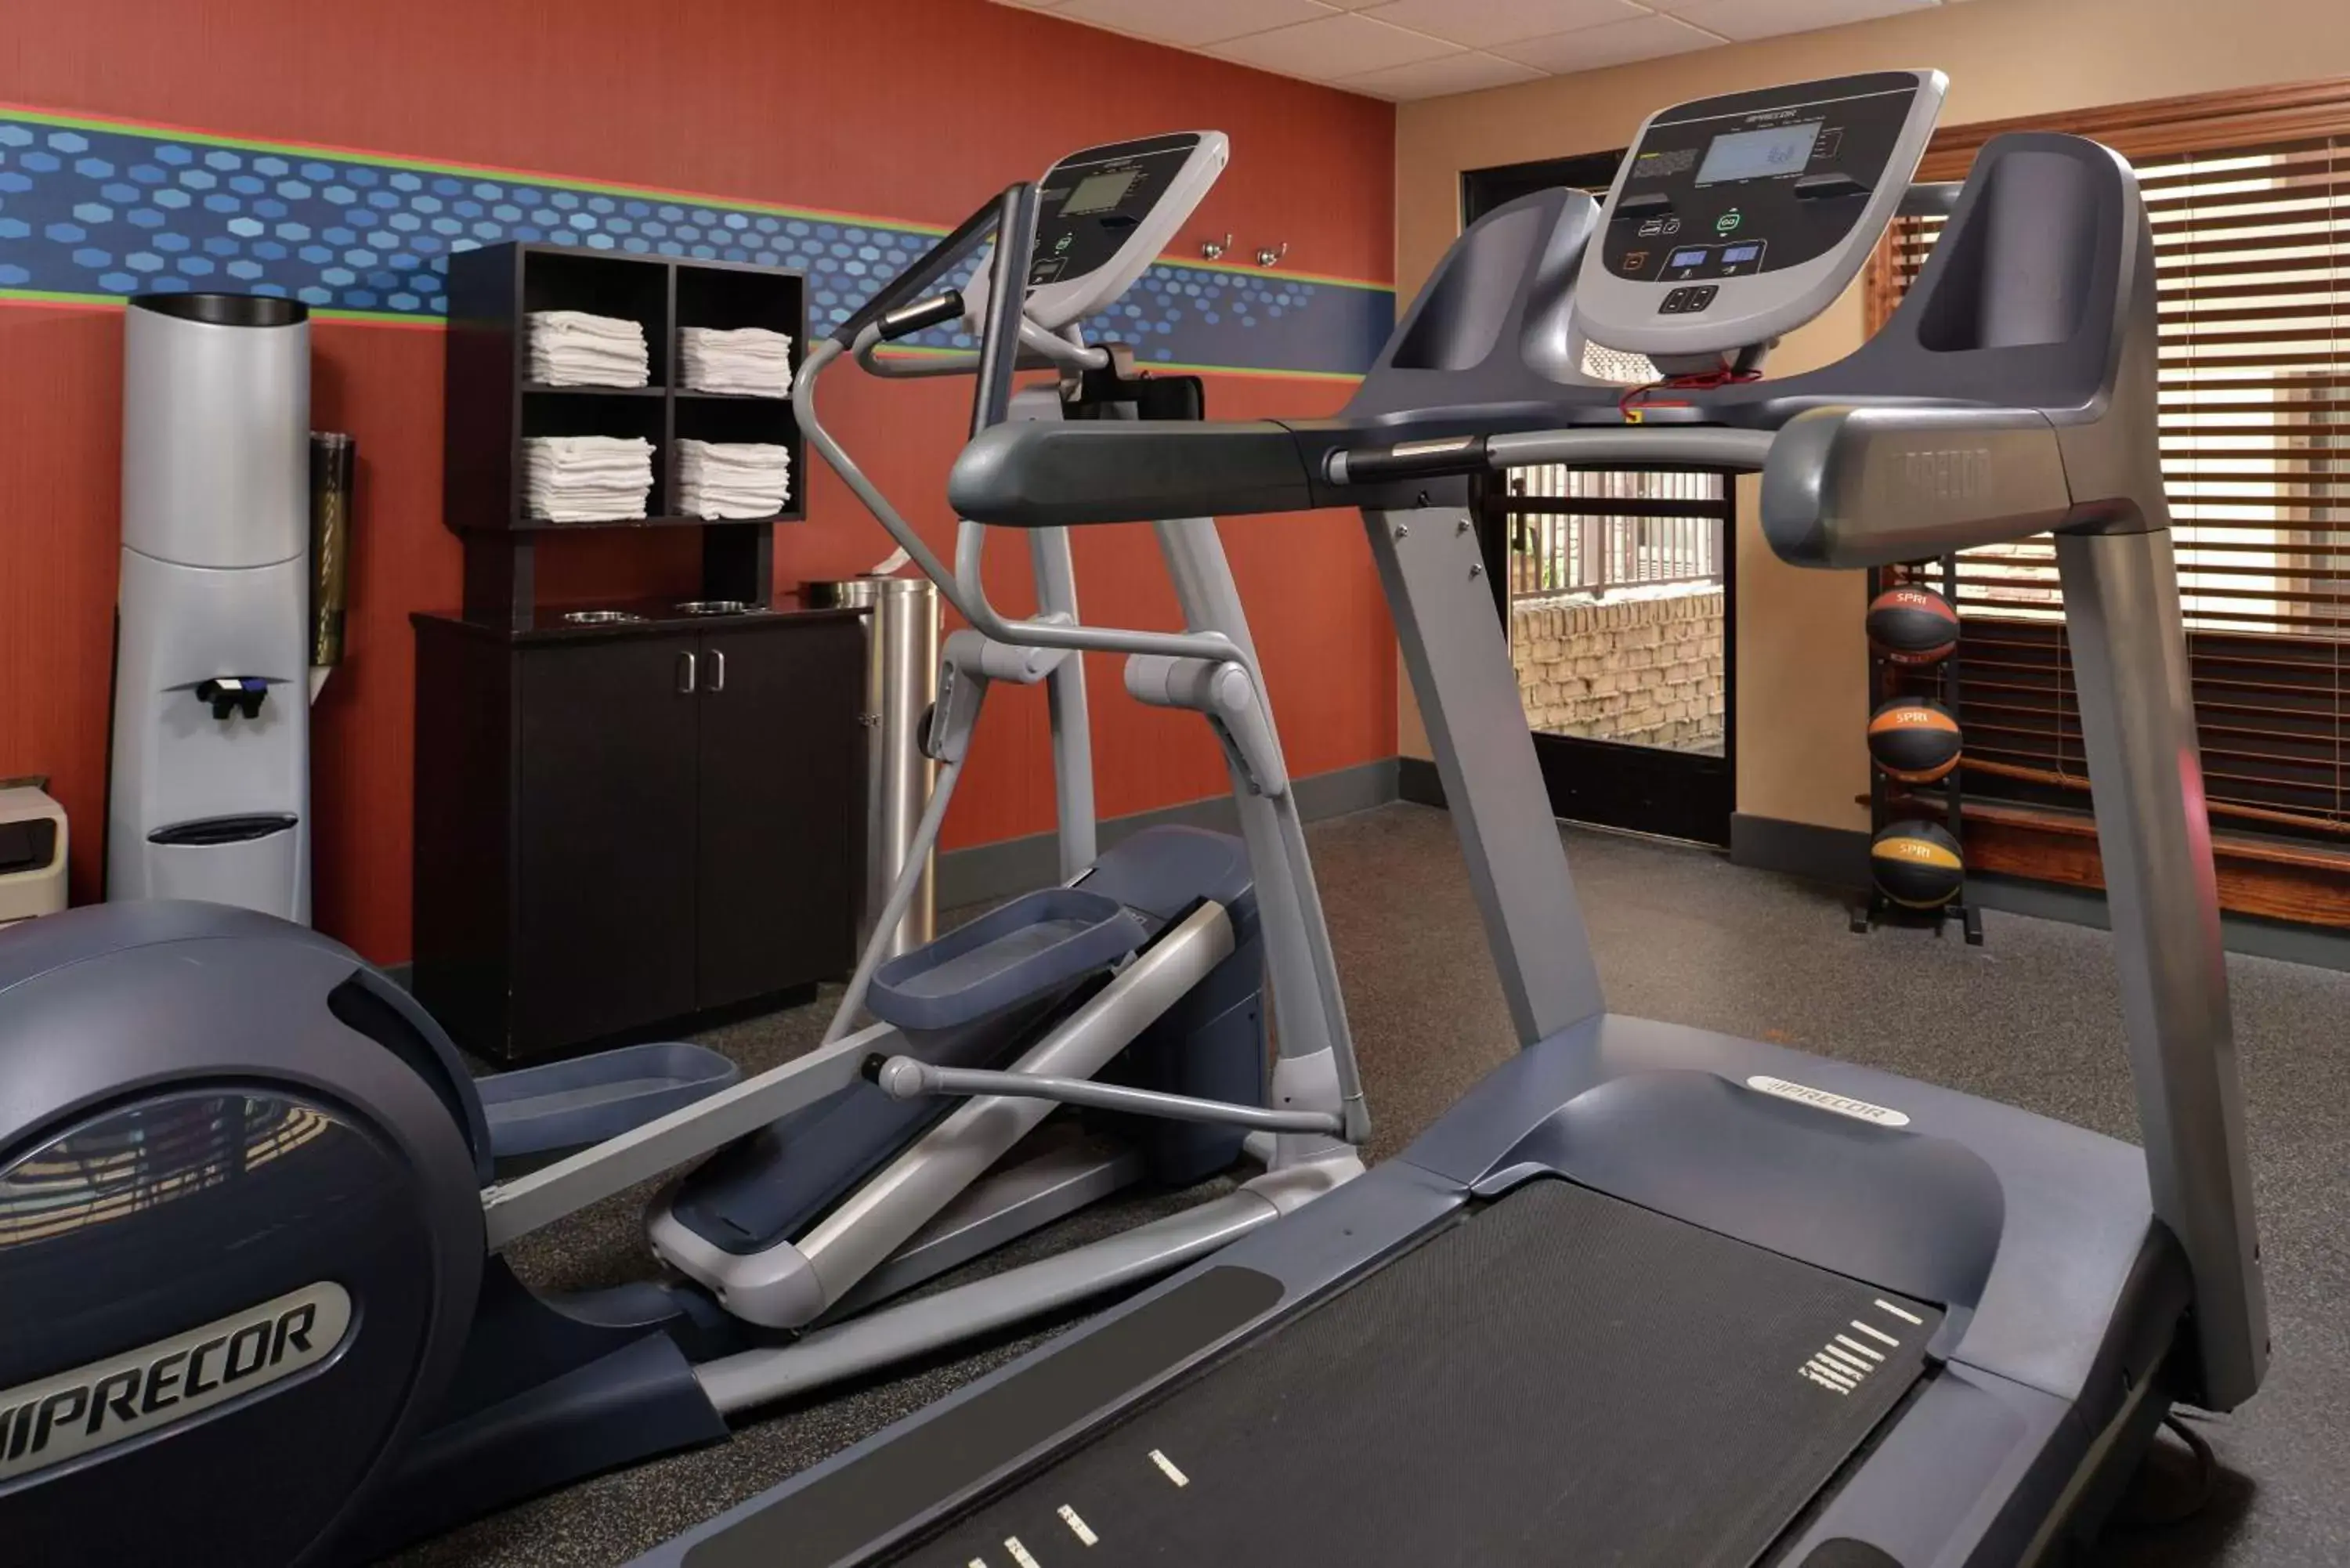 Fitness centre/facilities, Fitness Center/Facilities in Hampton Inn South Hill